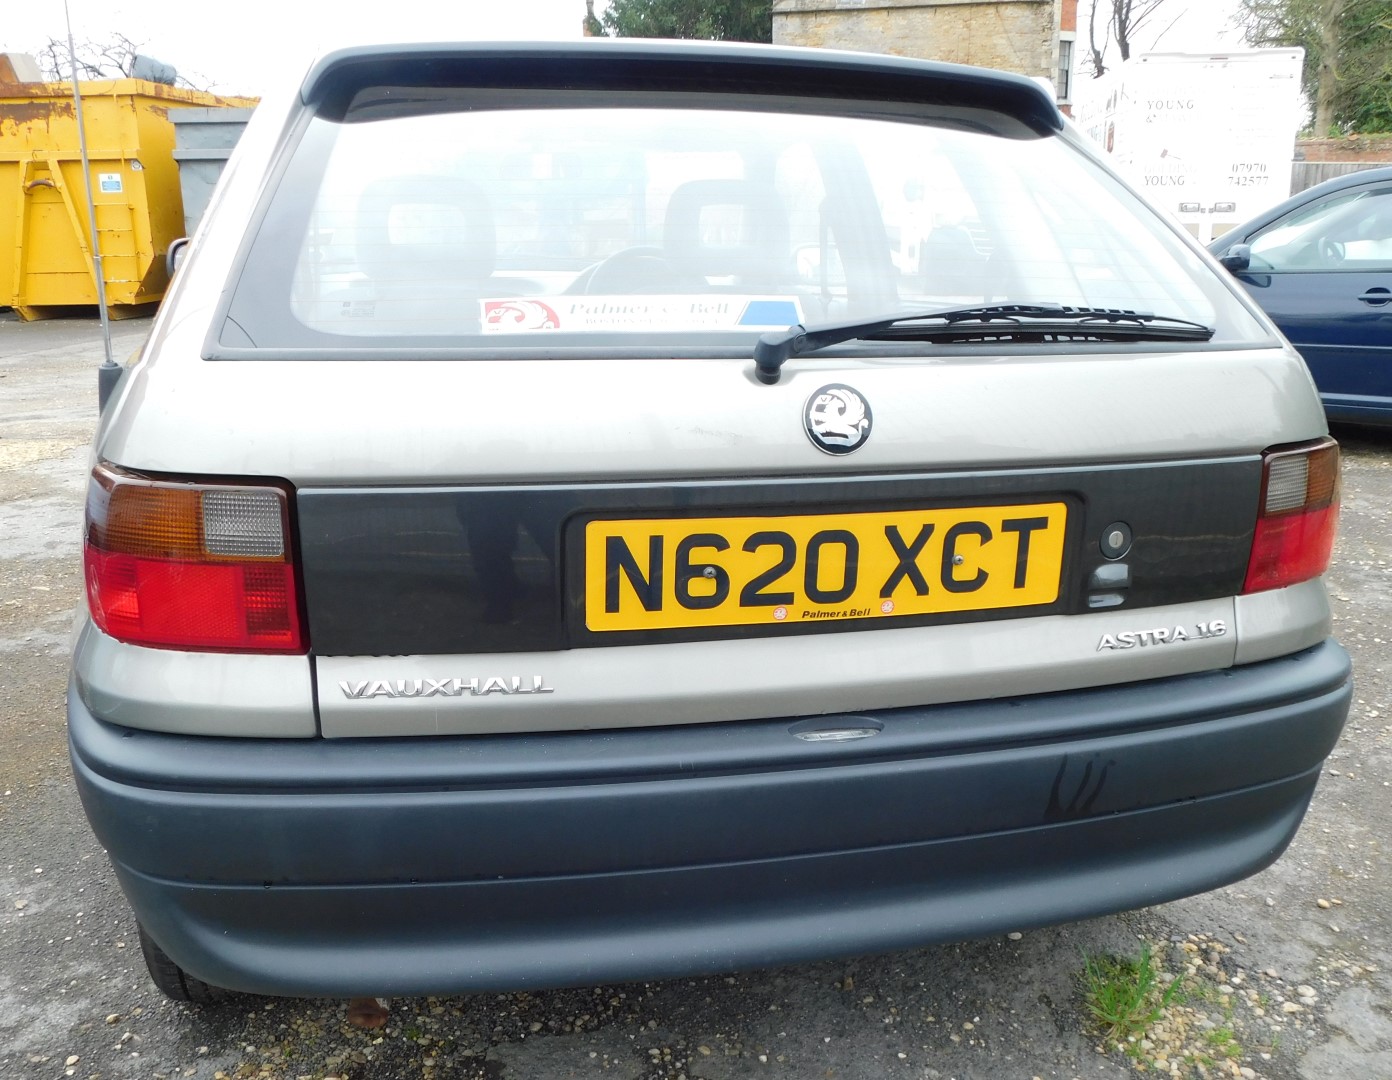 A Vauxhall Astra Merit, Registration N620 XCT, 5 door hatchback, manual, petrol, silver, first regis - Image 2 of 7